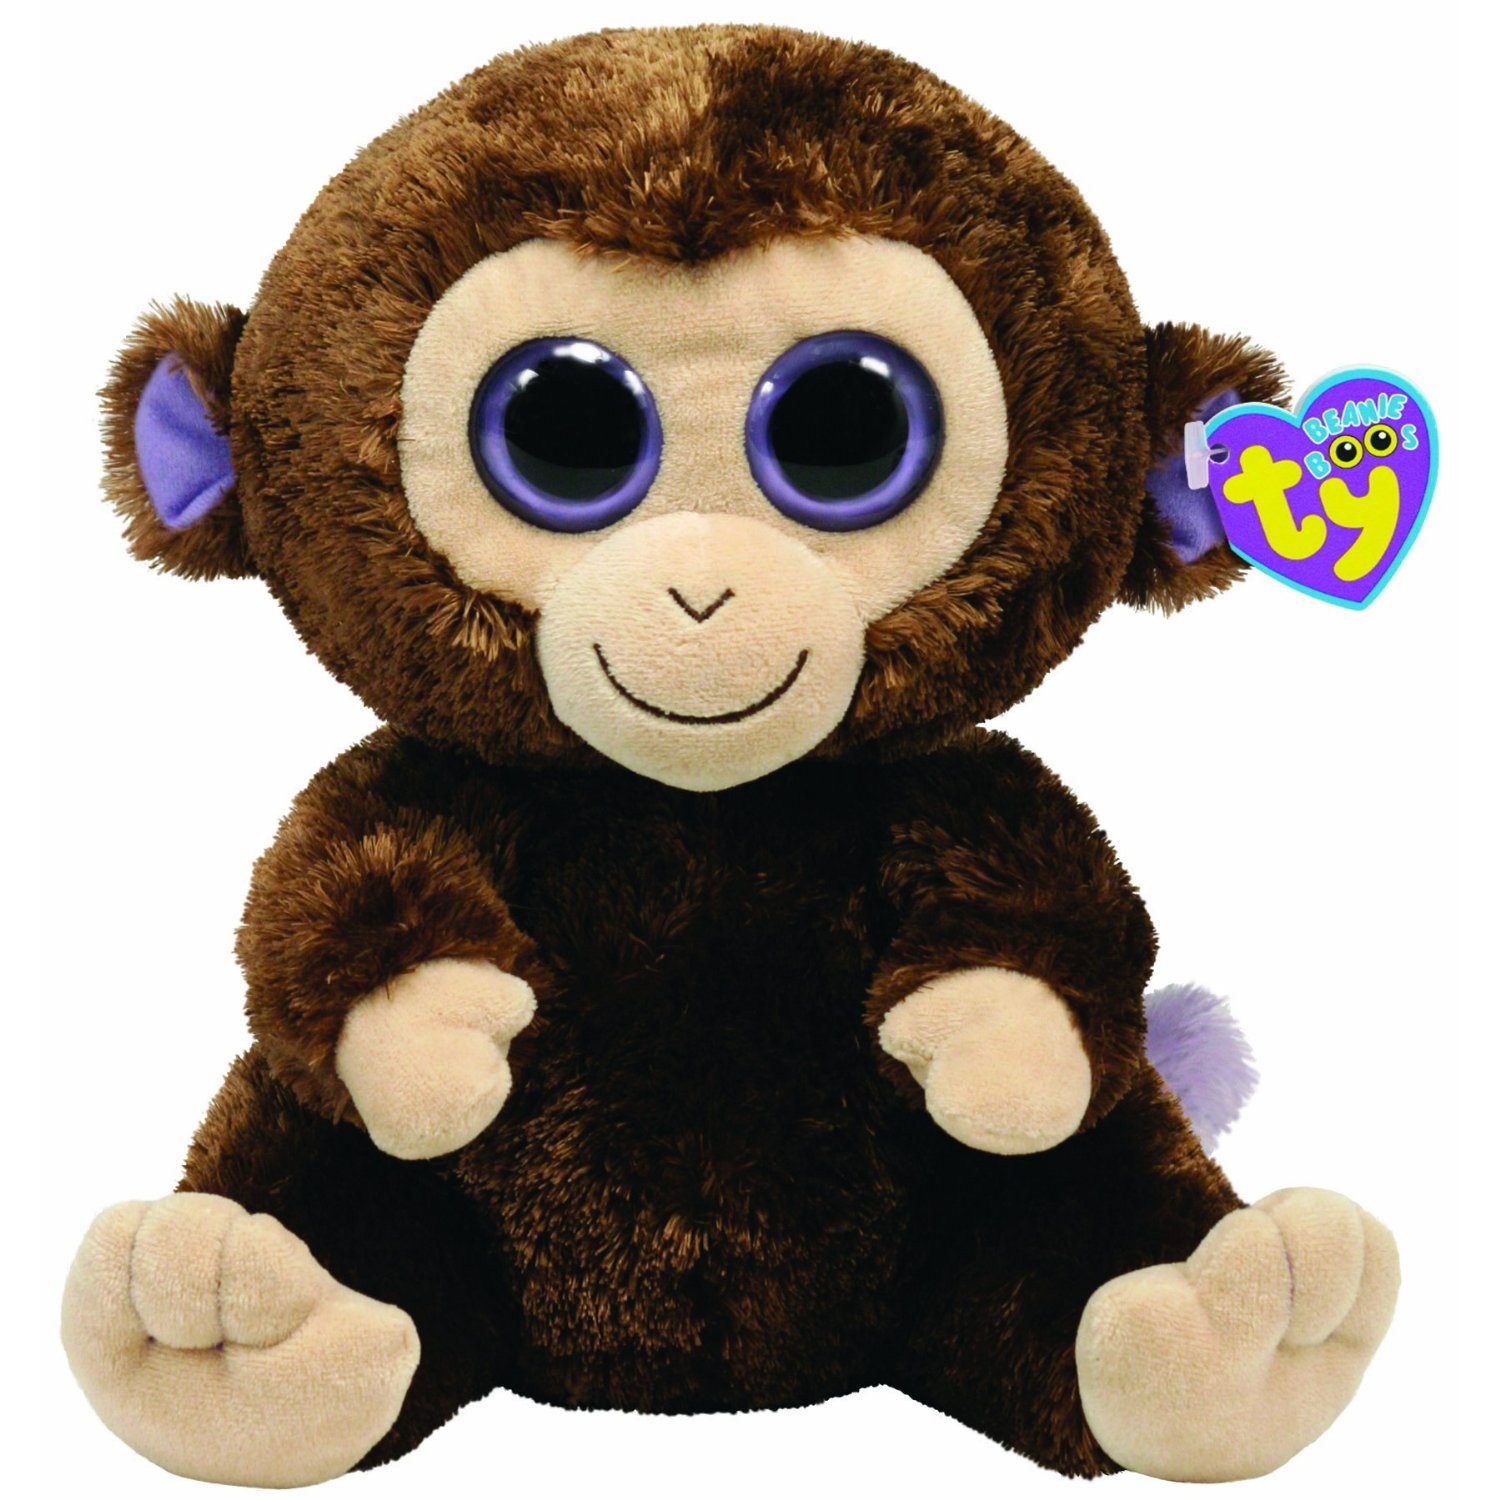 Ty 6" Coconut Brown Monkey Beanie Boos Plush Stuffed Animal New w/ Tag MWMT's 